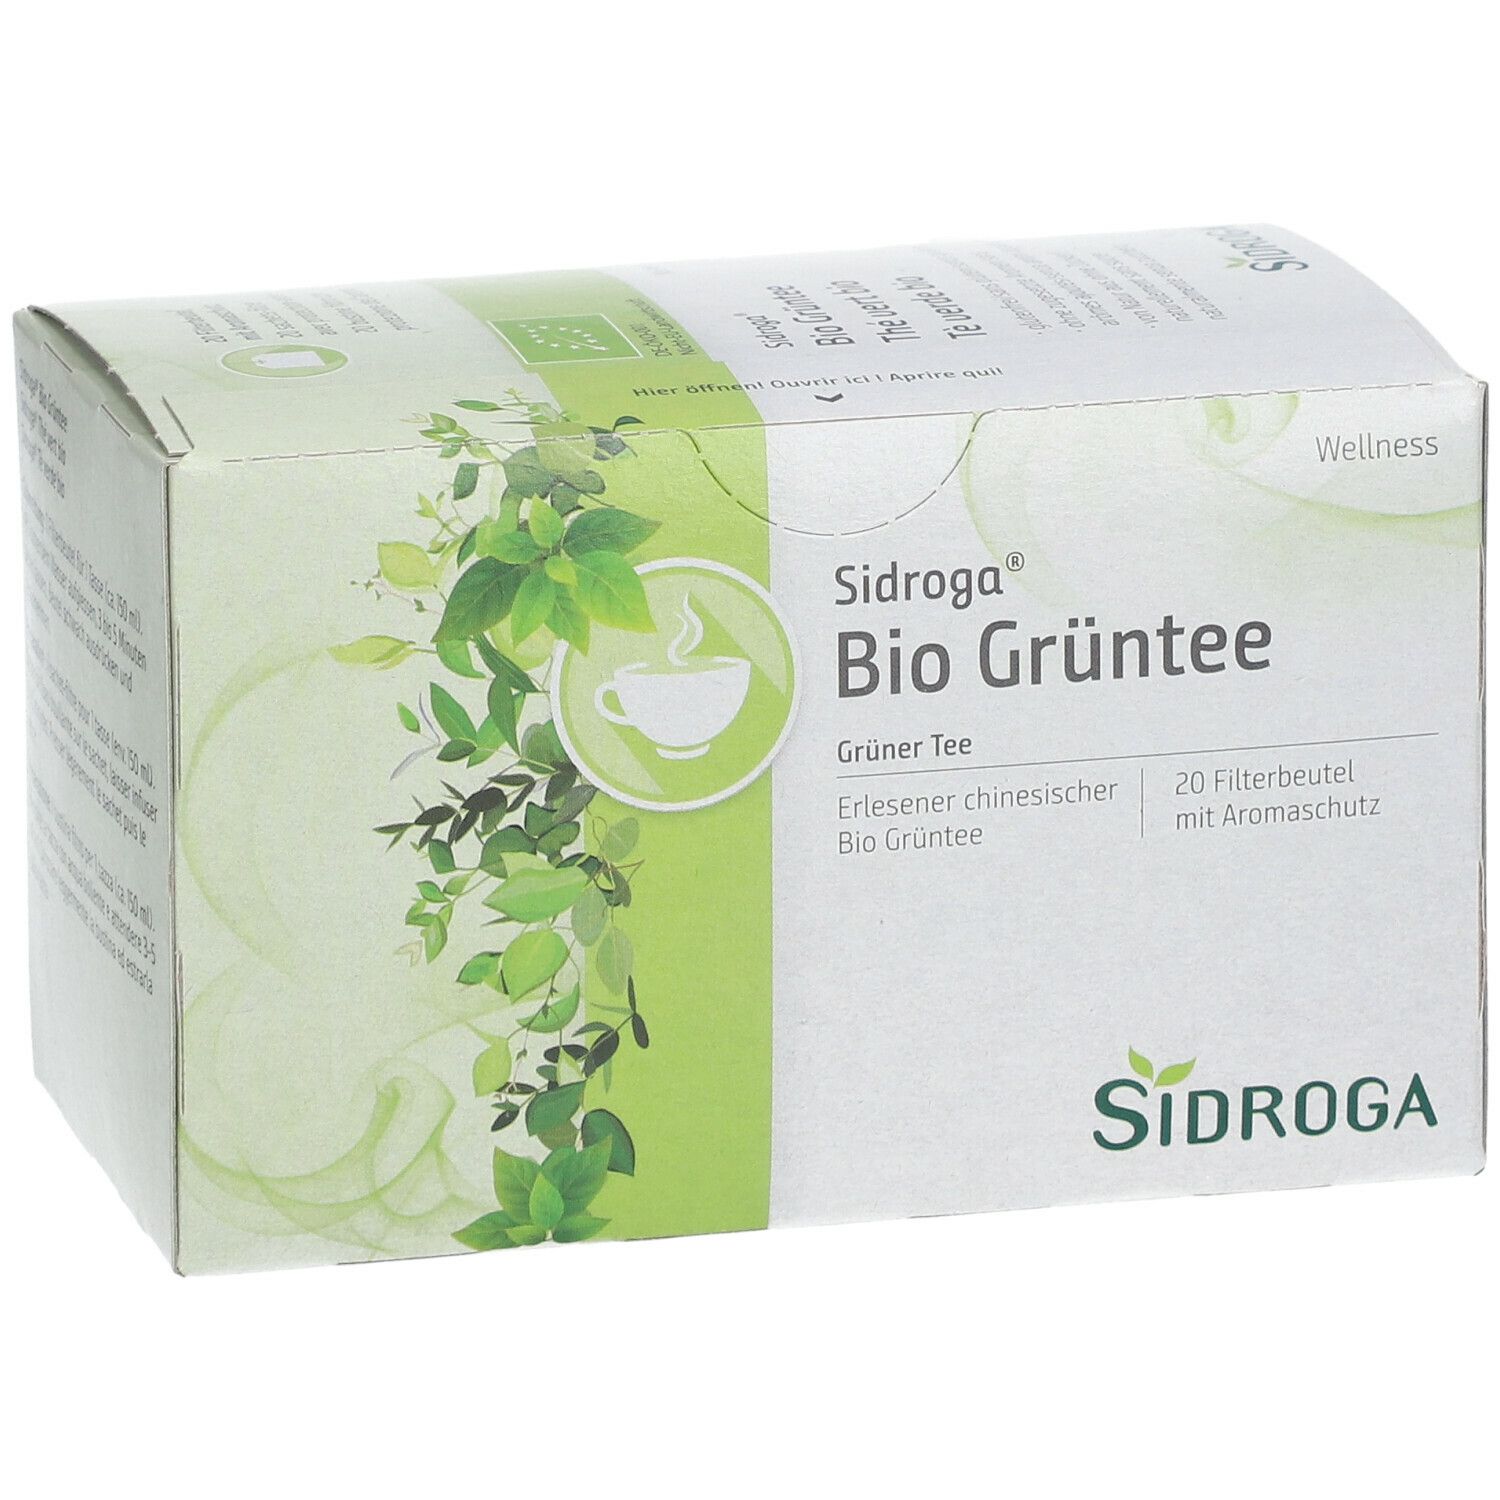 Sidroga® Wellness Grüntee